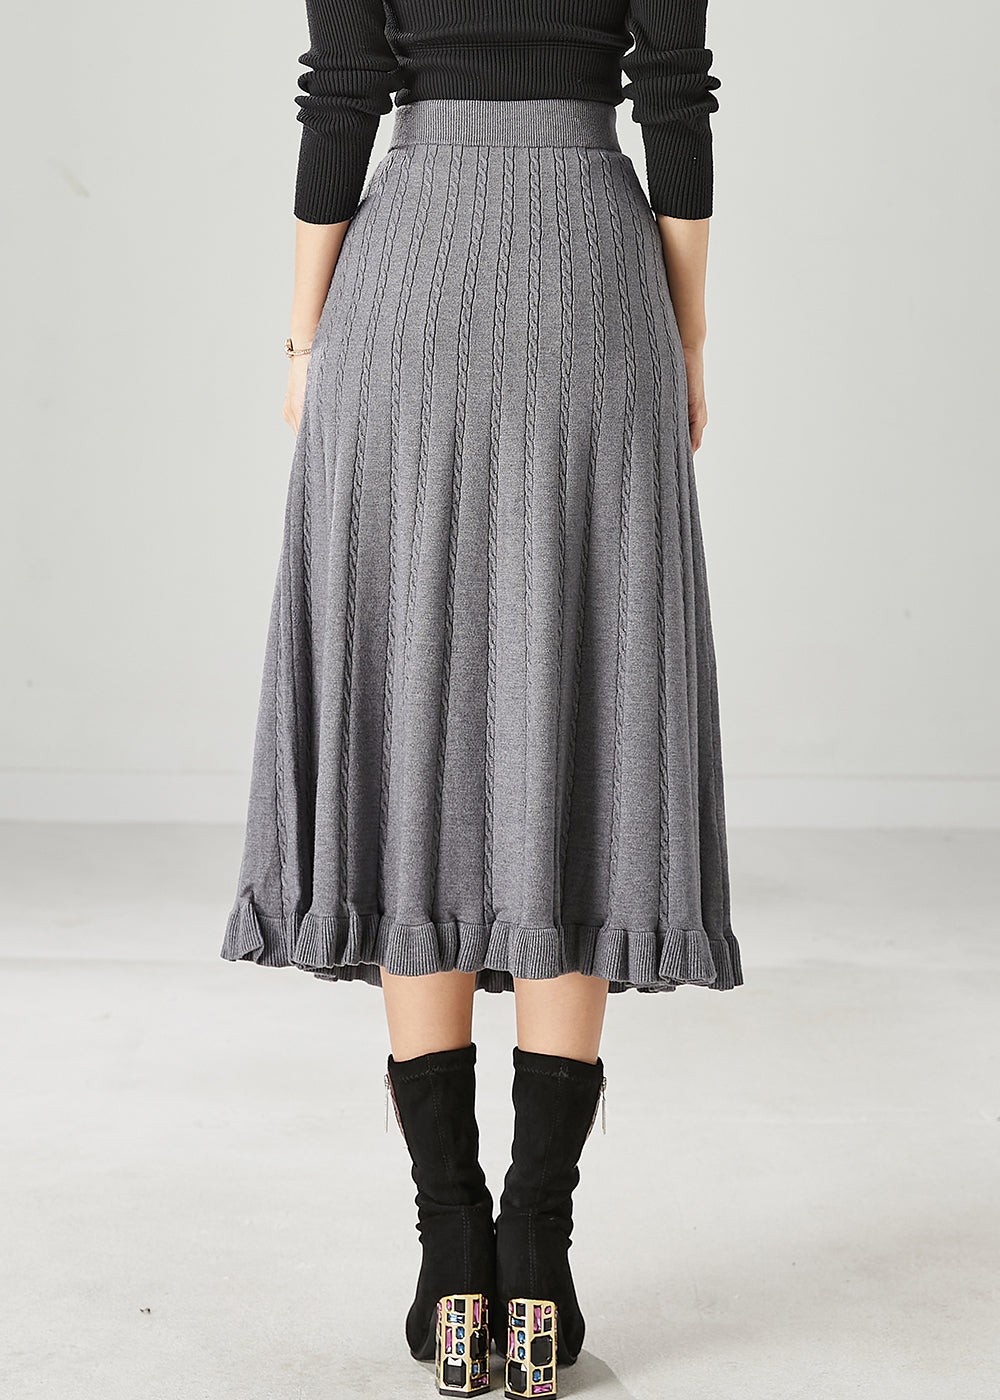 Casual Grey Ruffled Exra Large Hem Knit Skirts Spring